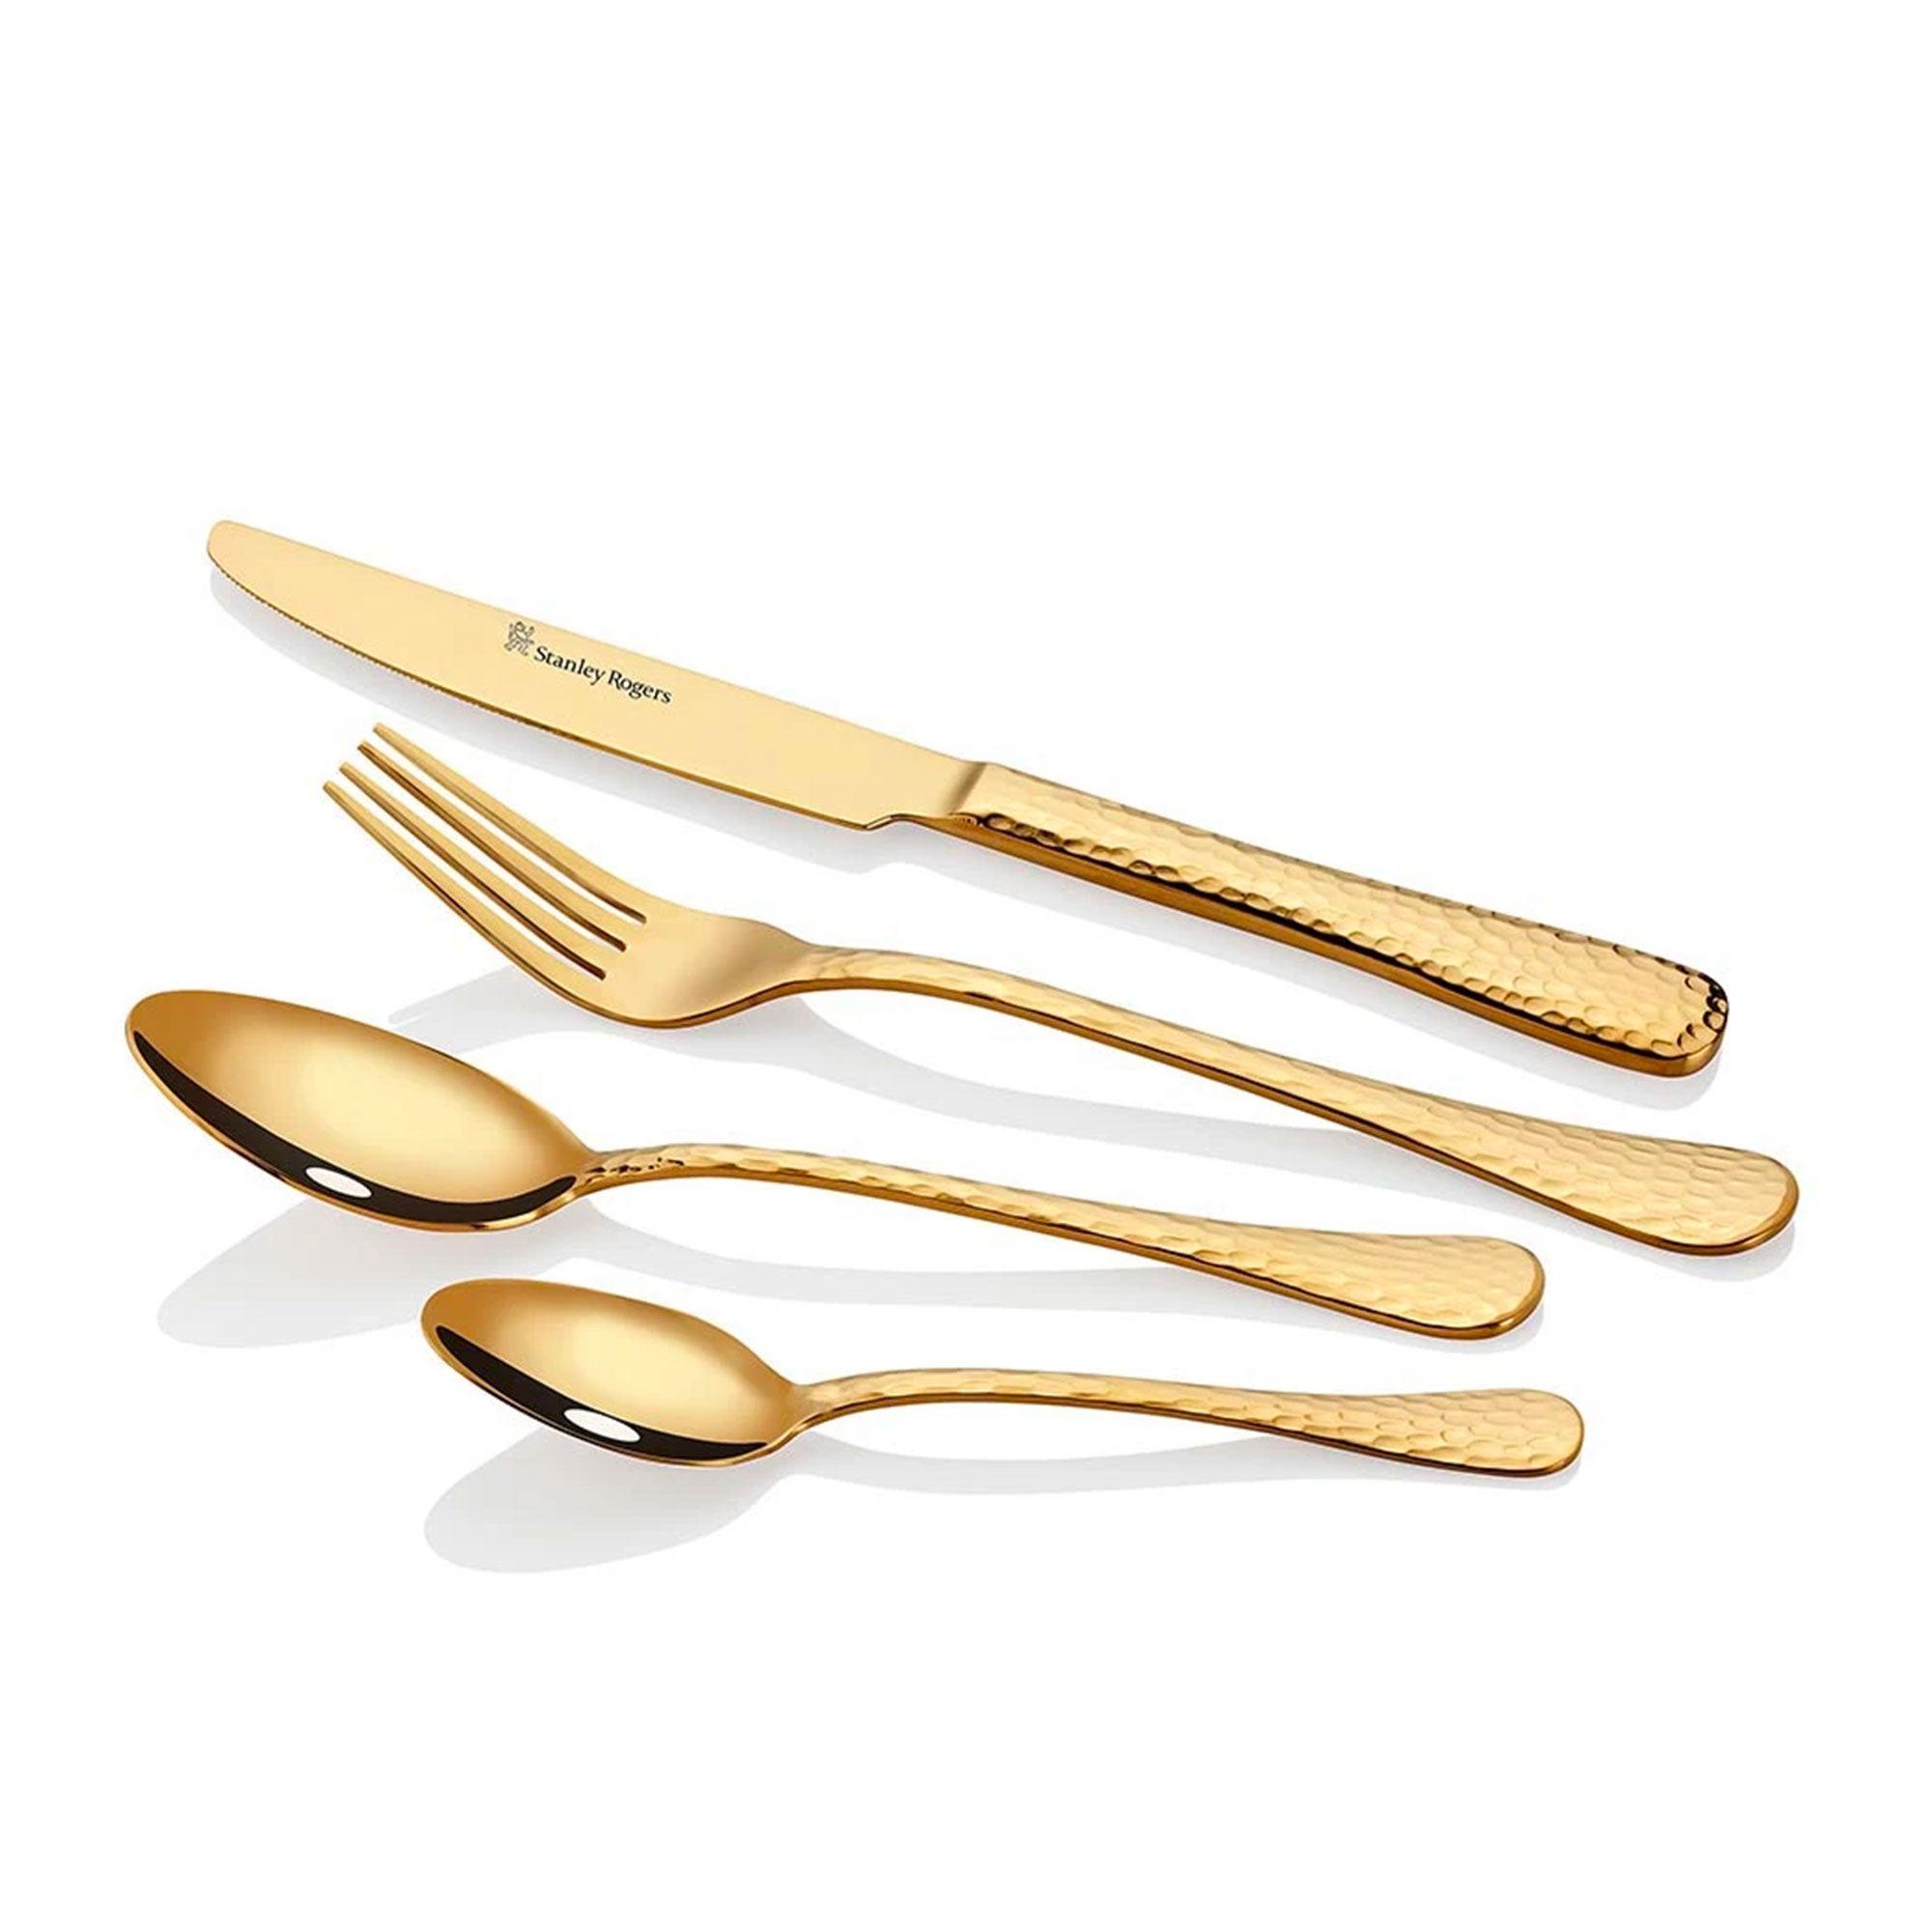 Stanley Rogers Bolero Cutlery Set 16pc Gold Image 3